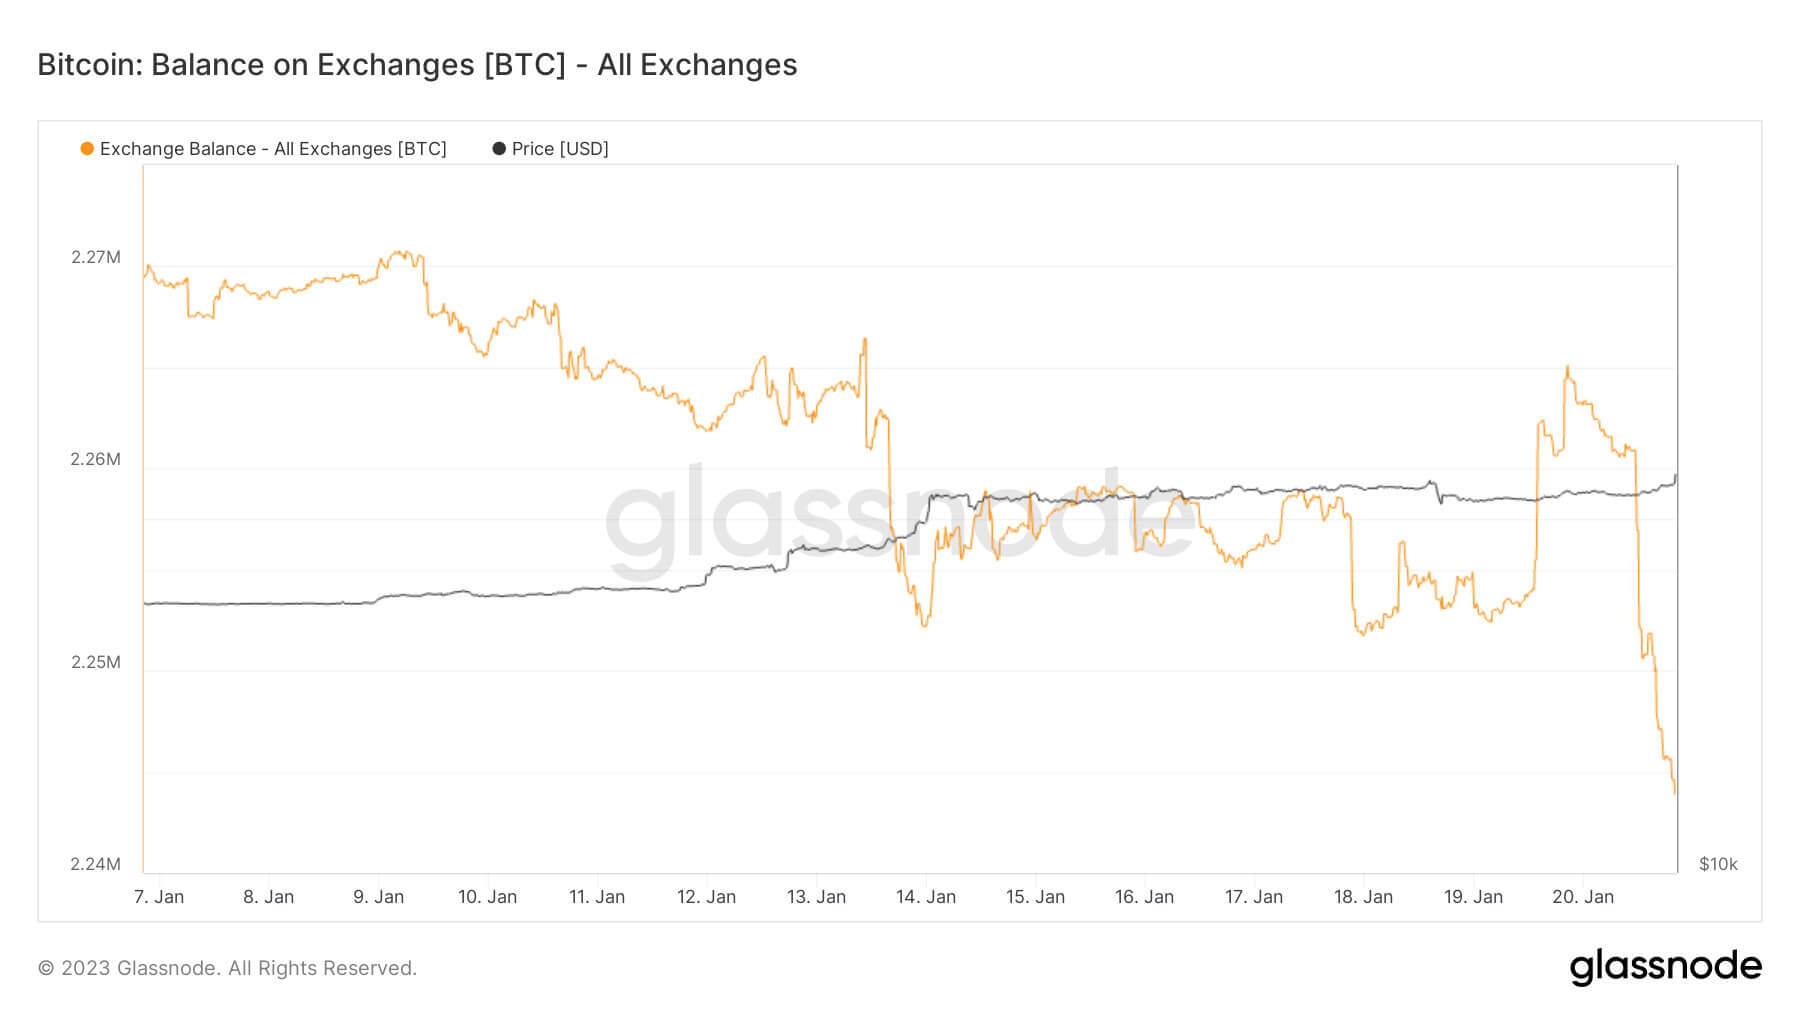 Bitcoin: Balance on Exchanges (Source: Glassnode)